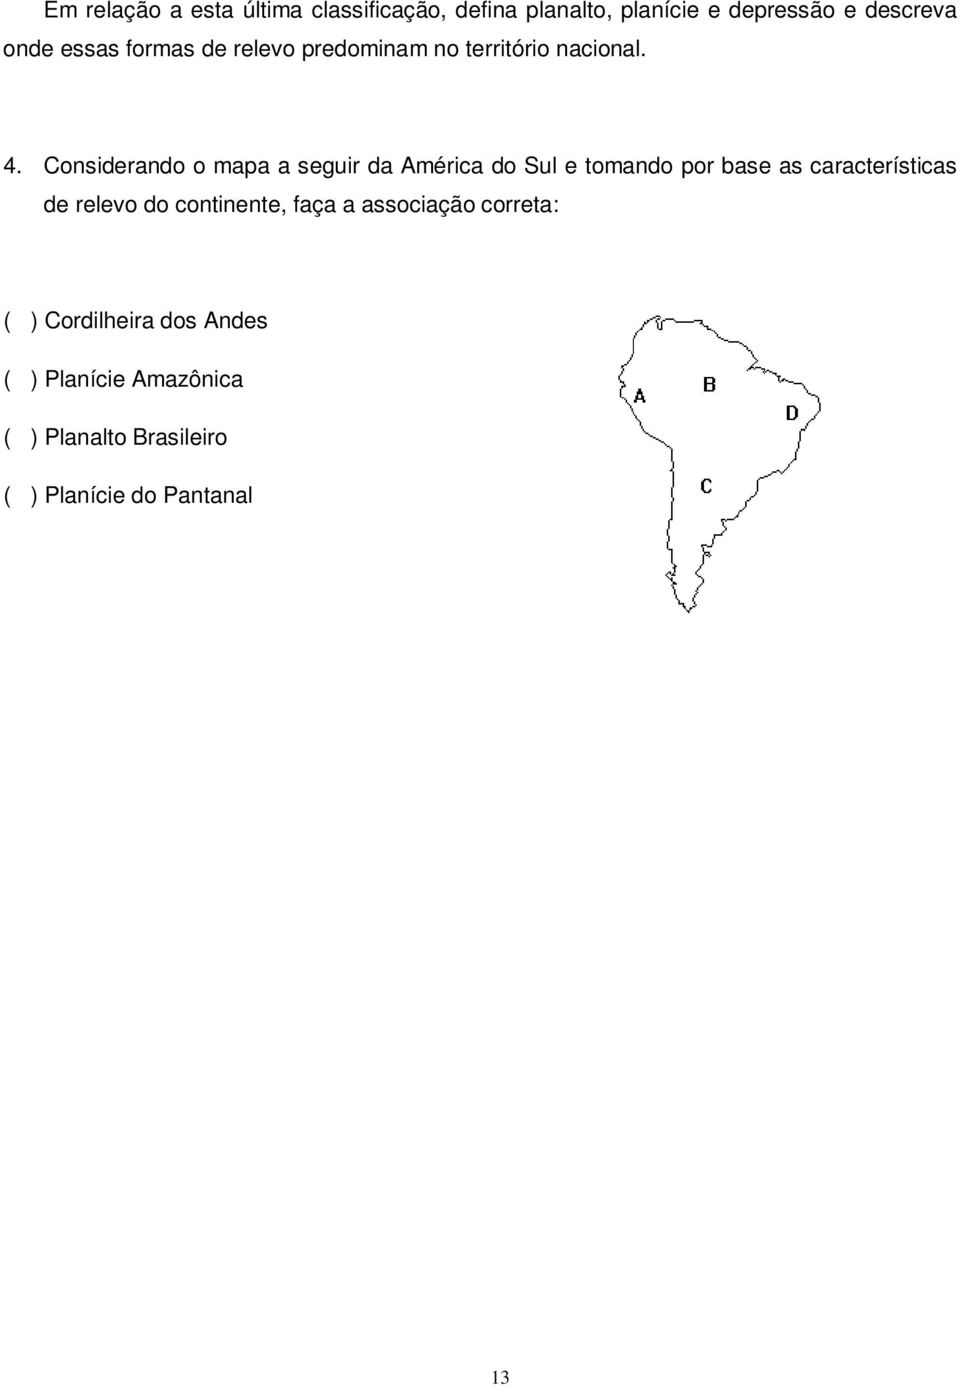 Considerando o mapa a seguir da América do Sul e tomando por base as características de relevo do